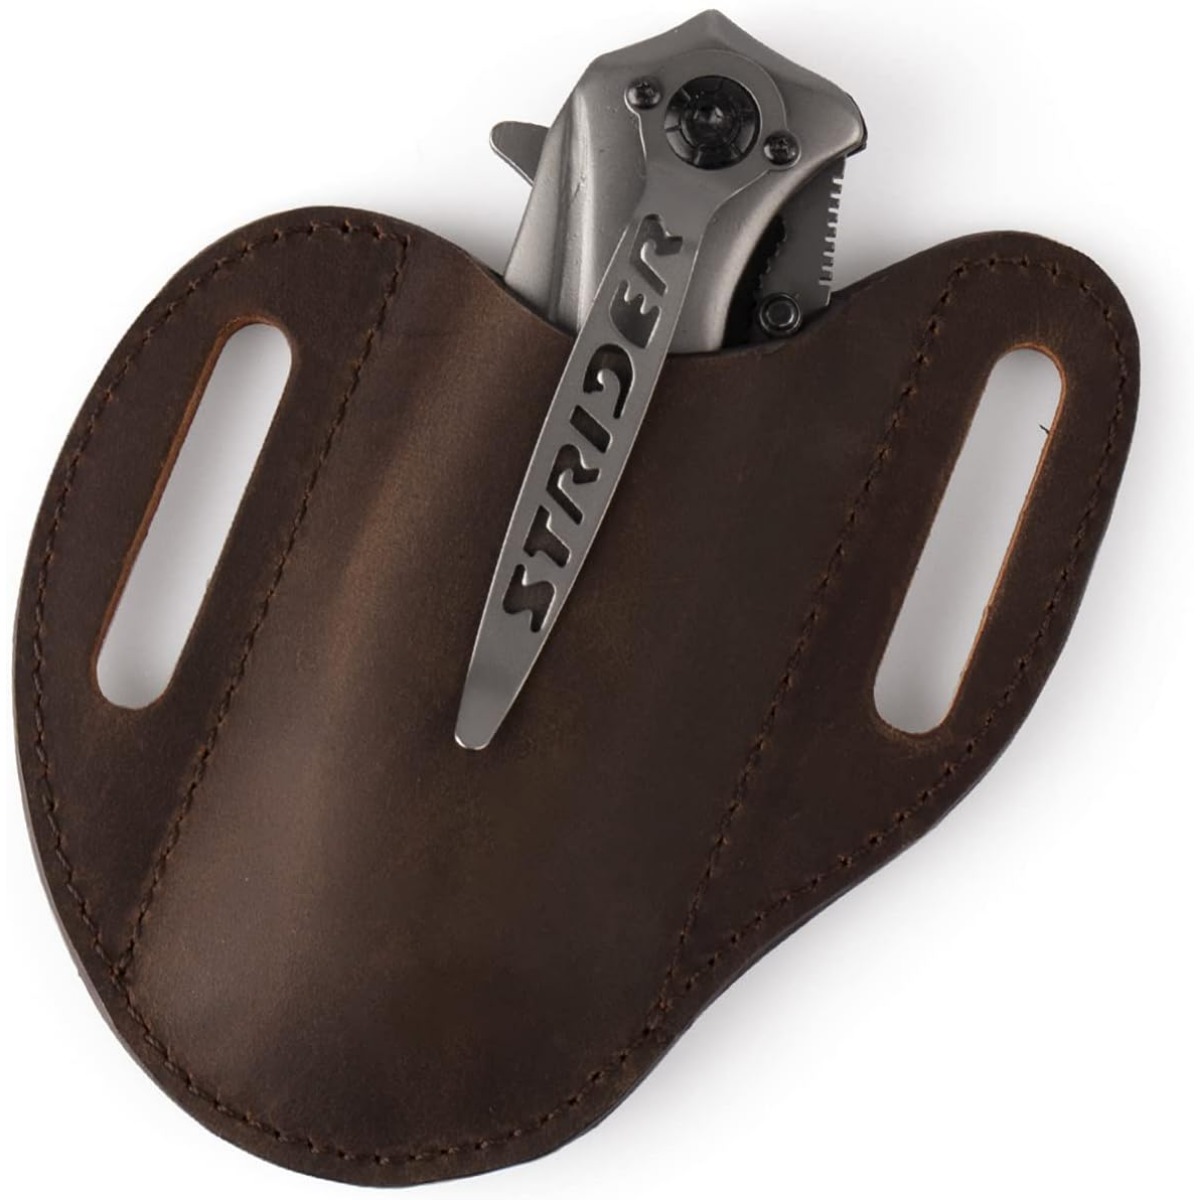 DONGKER Bolsa de cuero para cuchillos de bolsillo de 4 pulgadas, funda  plegable para cuchillos con lazo para cinturón para cuchillo plegable de 4